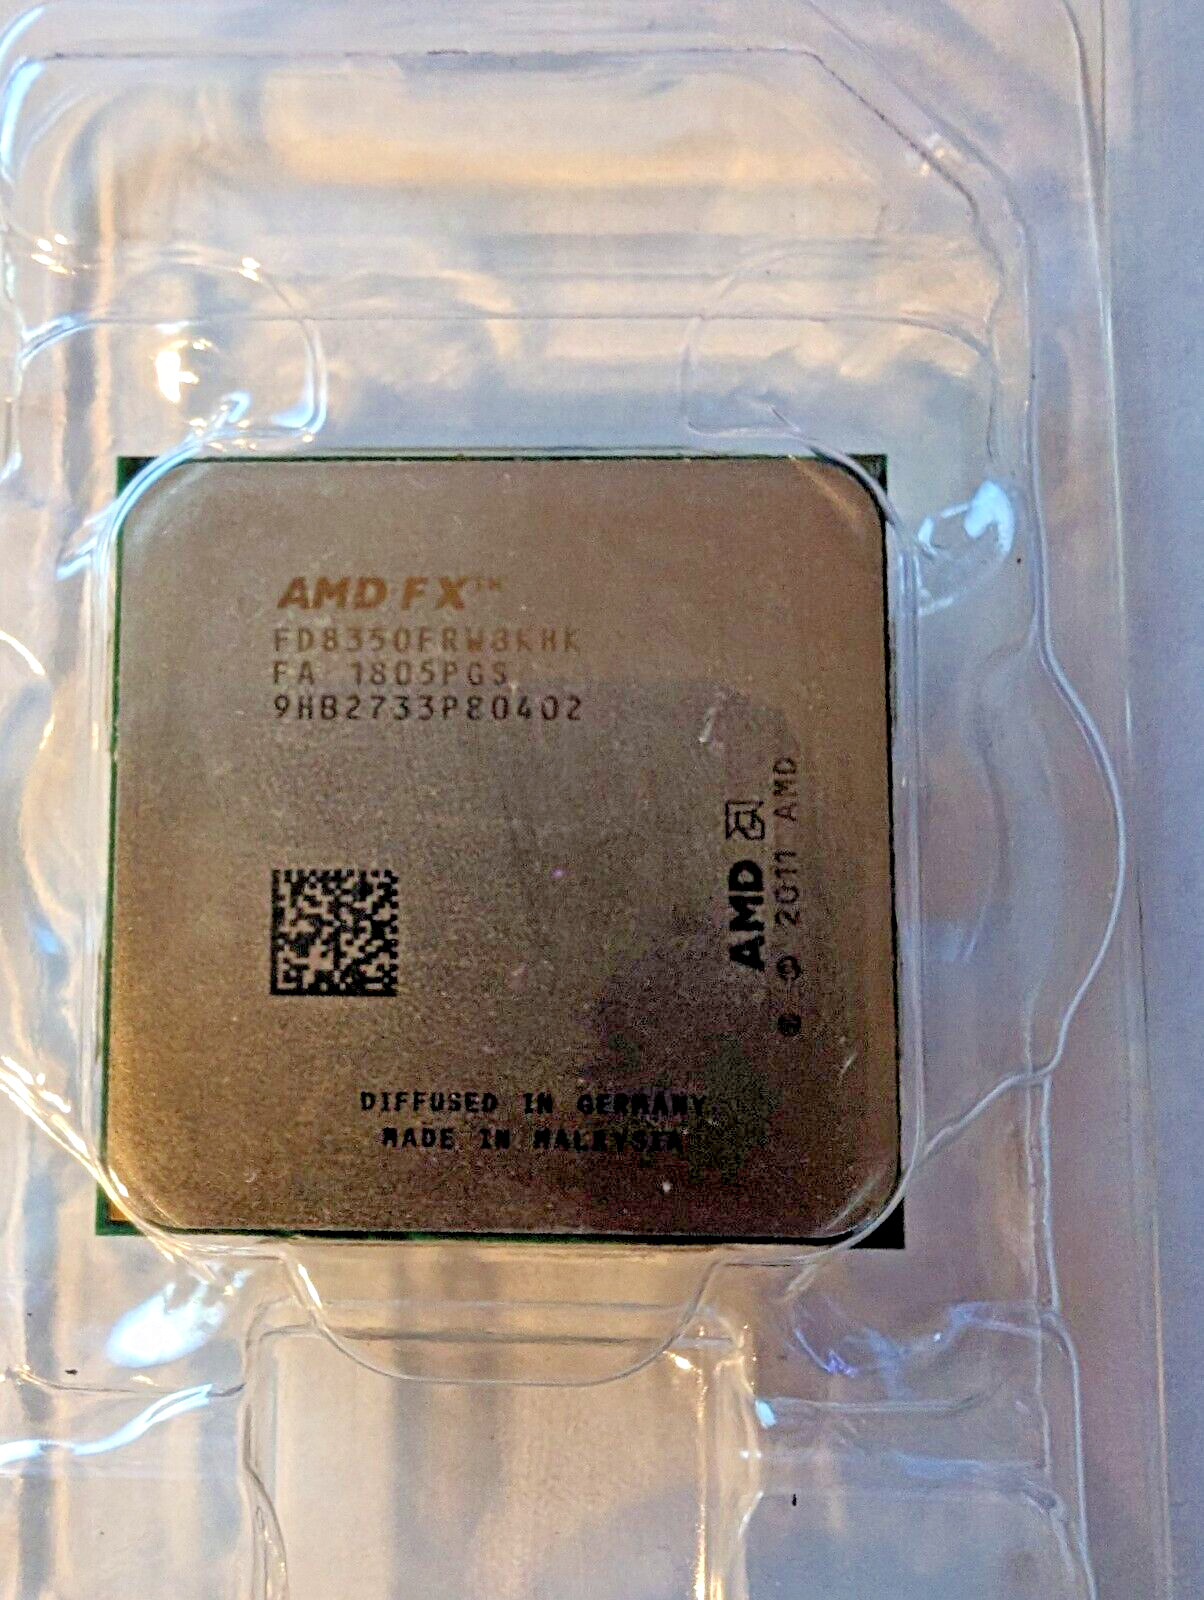 AMD FX-8350 4.0GHz Octa-Core AM3 Processor